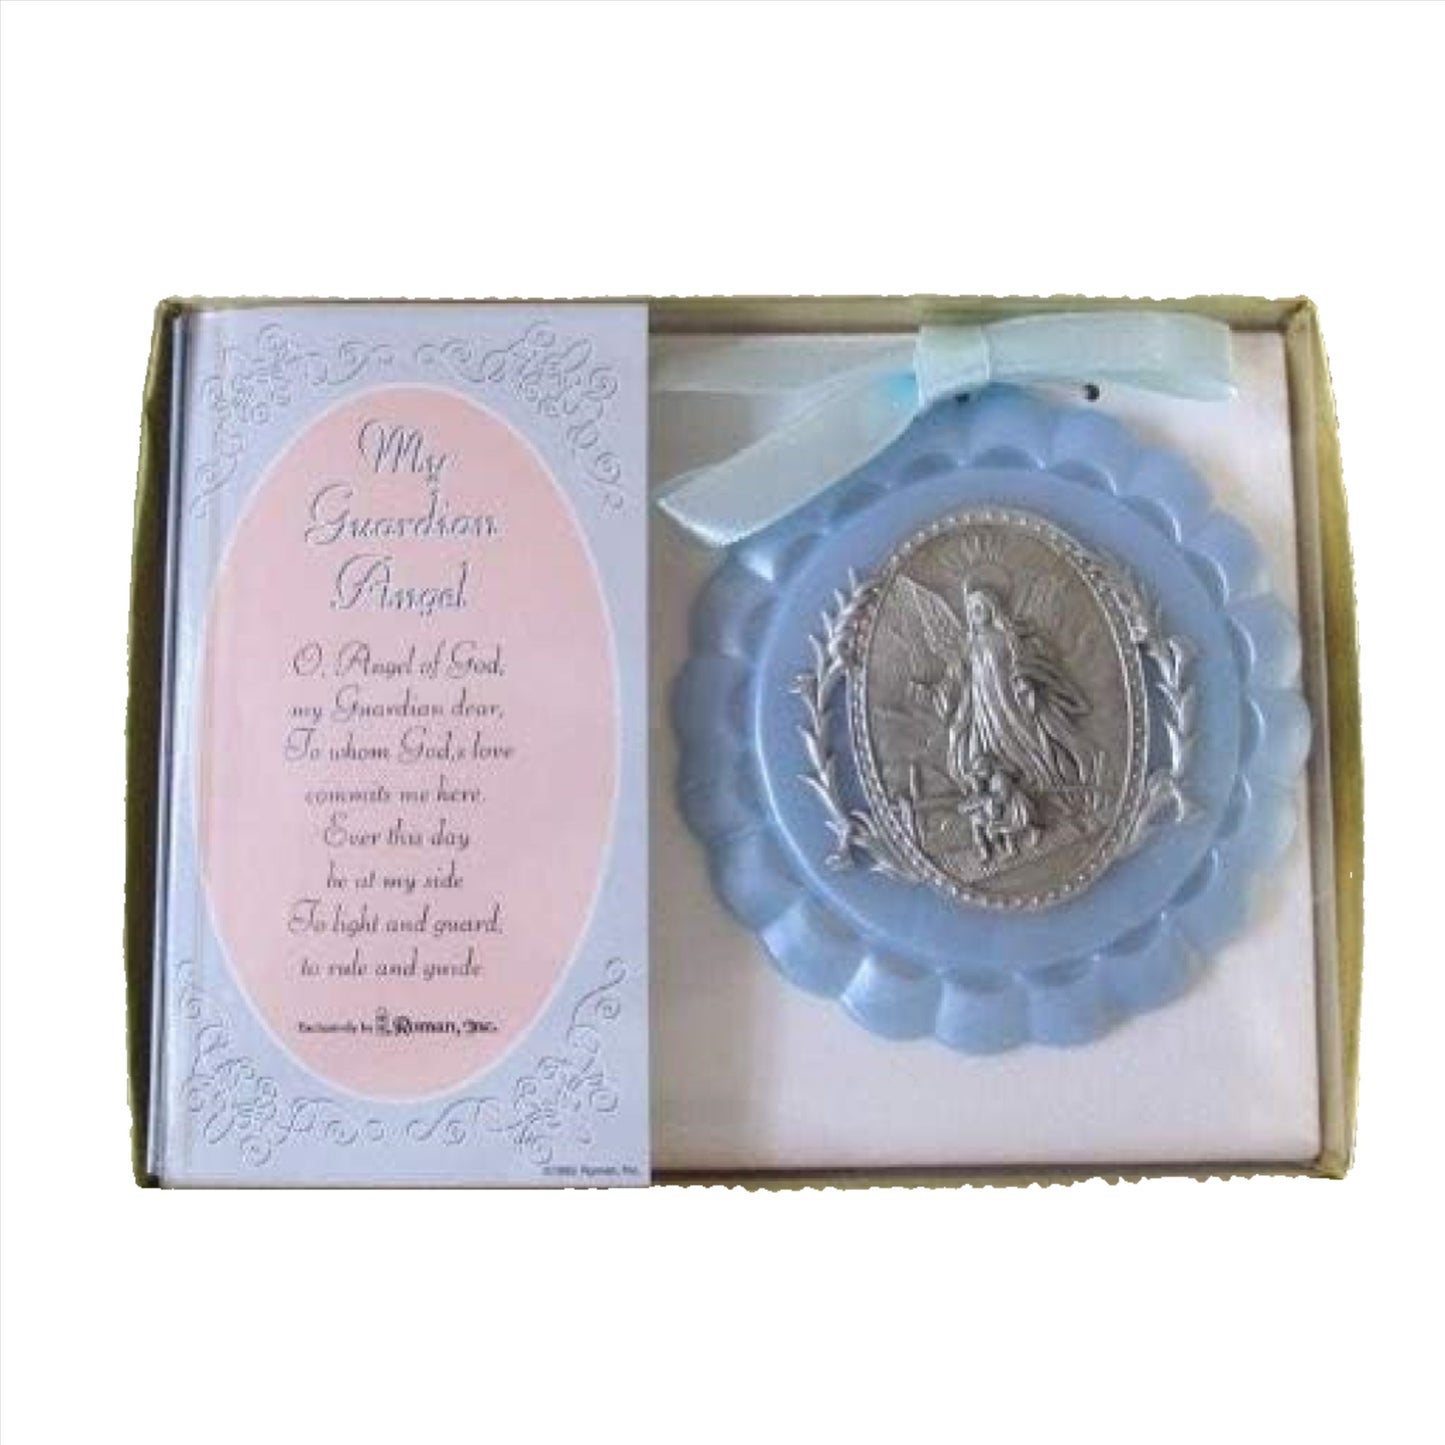 Roman Inc Blue Cradle Medal (Guardian Angel)